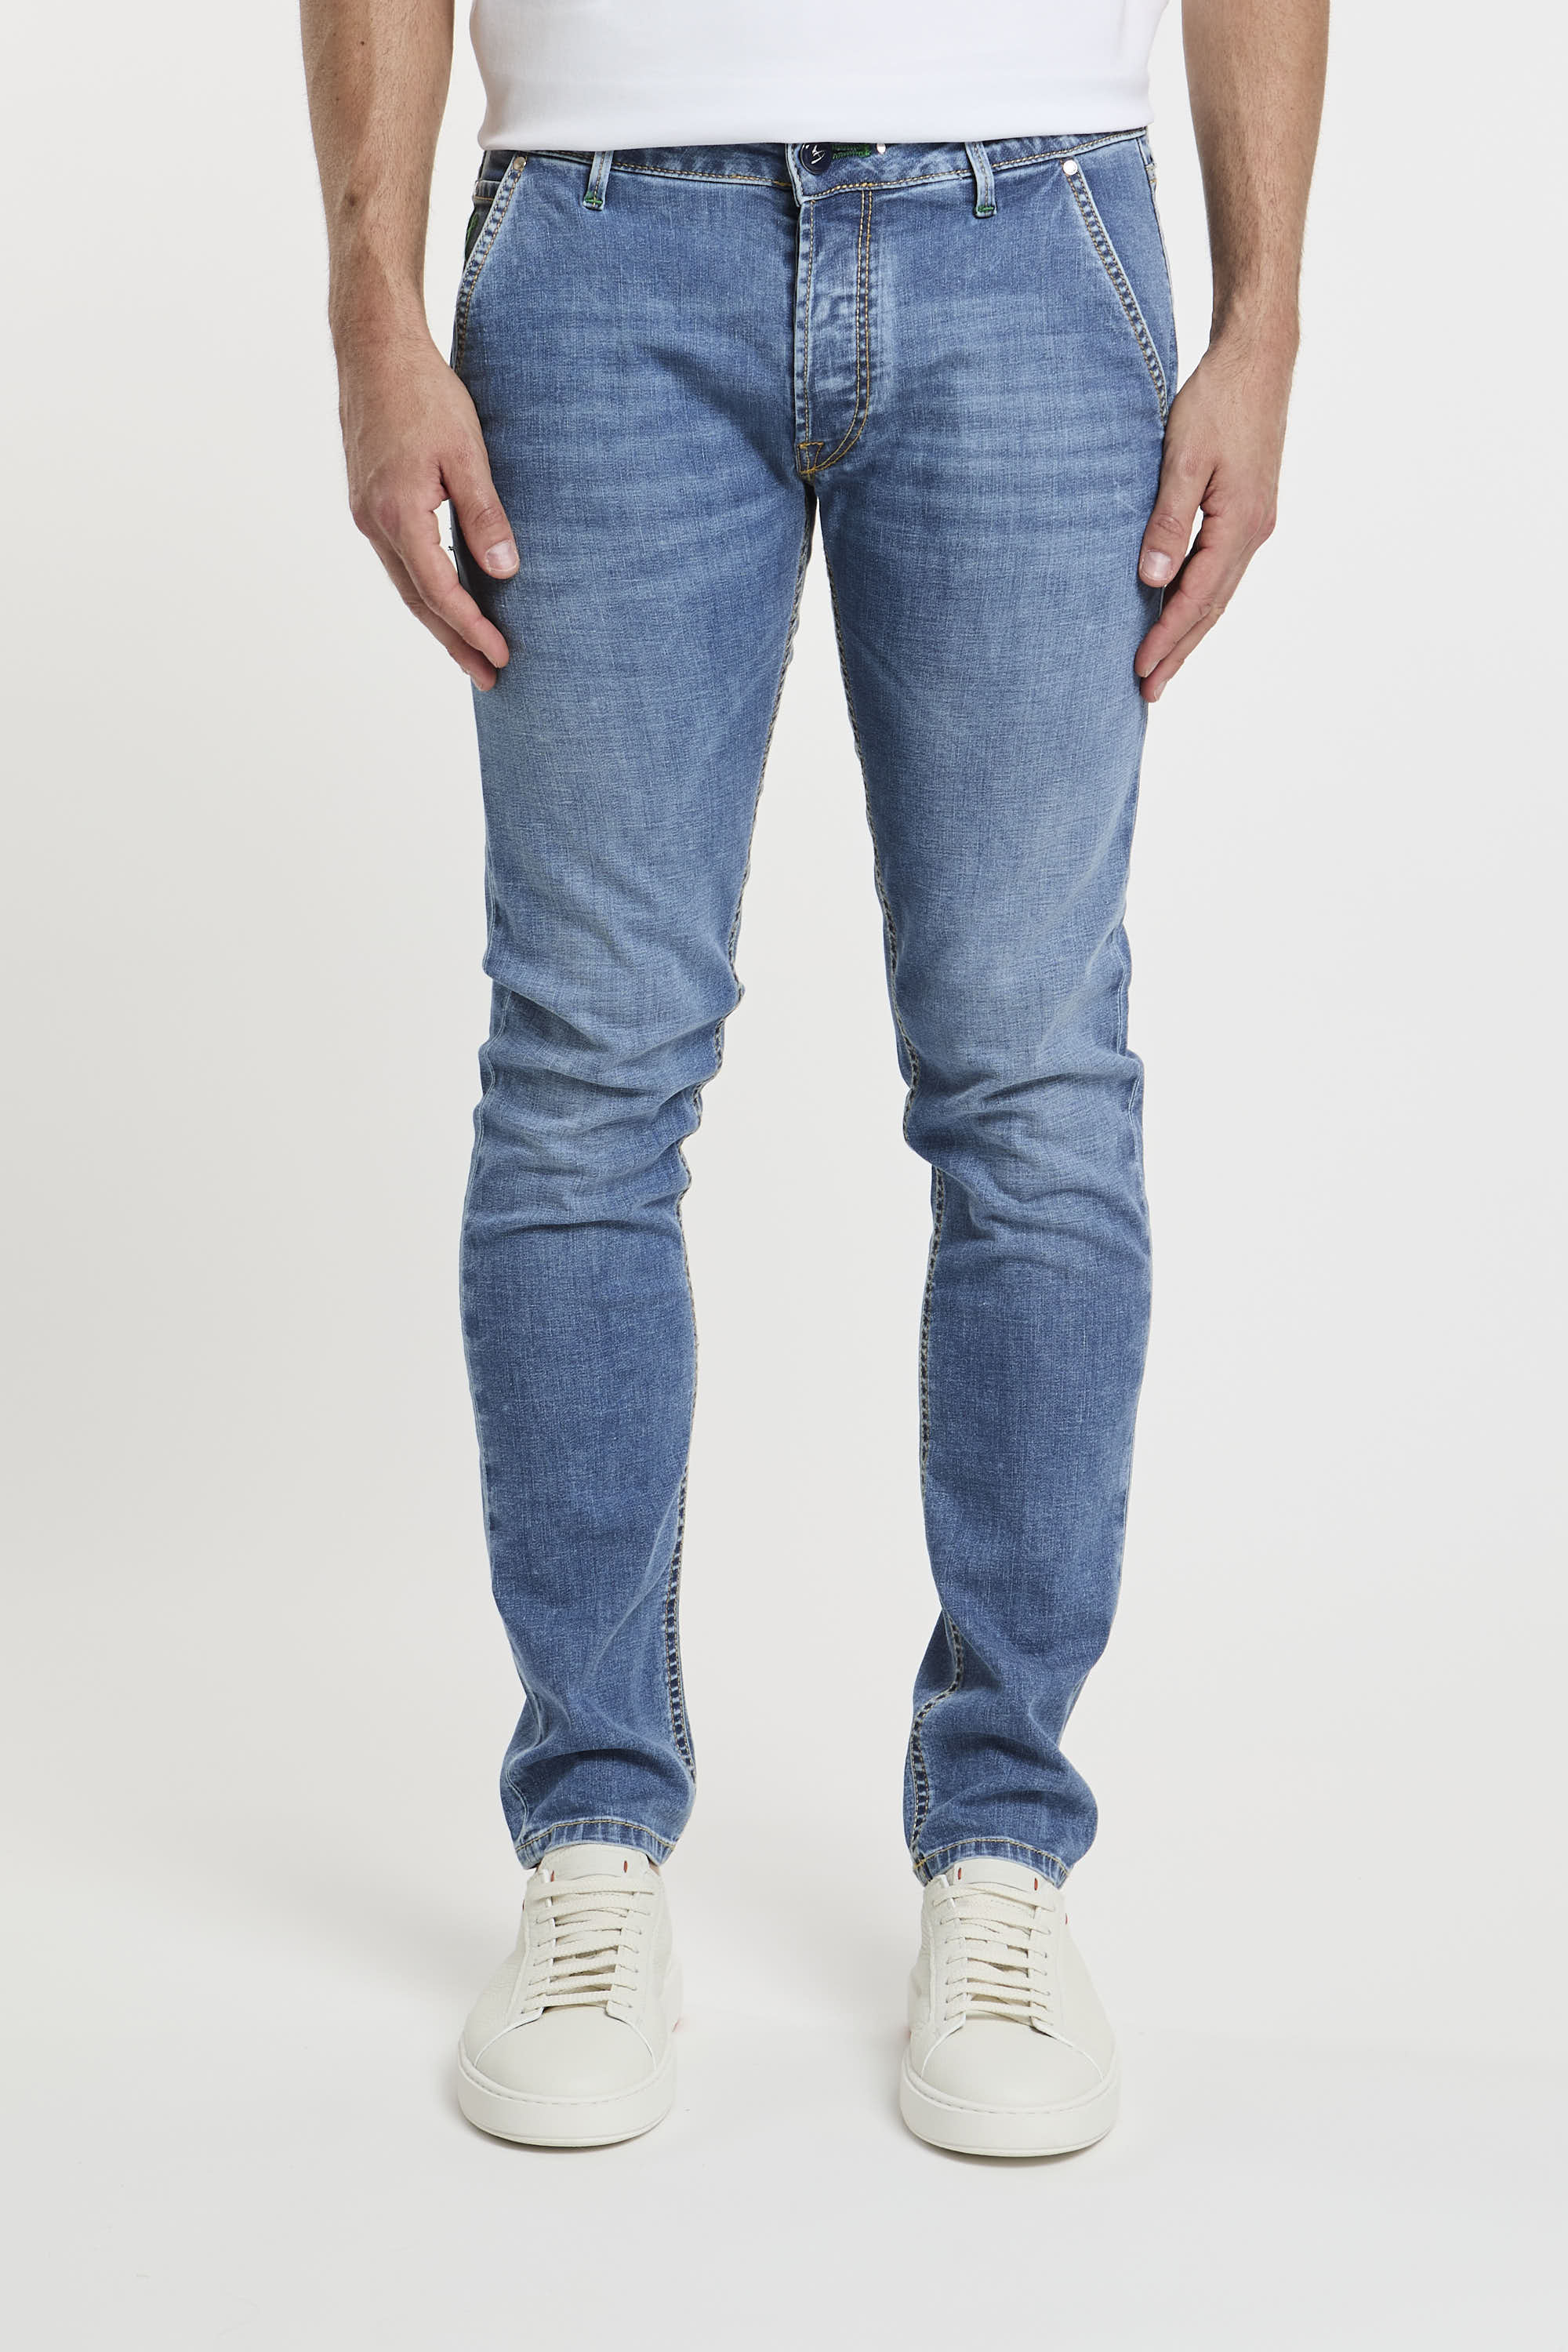 Handpicked Jeans Parma in Cotton Denim-1